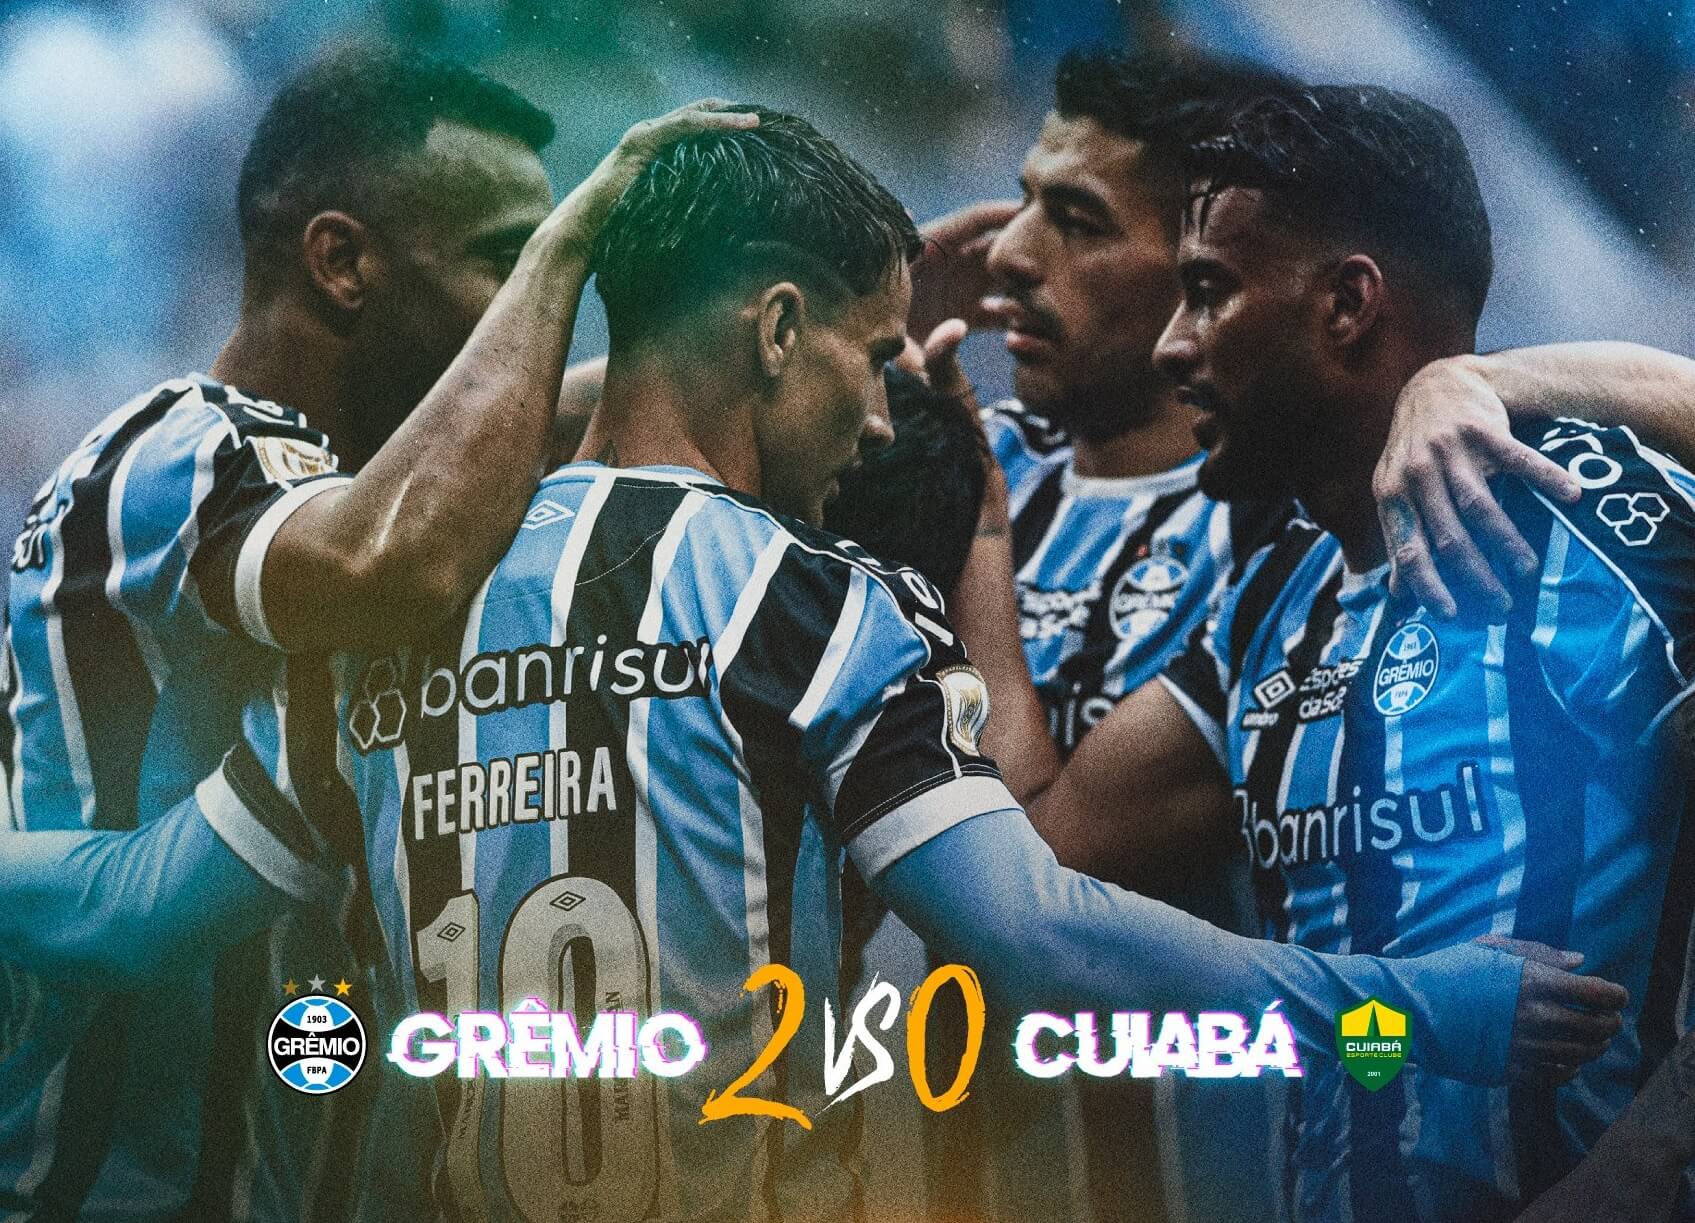 Grêmio vs Fortaleza: A Clash of Giants